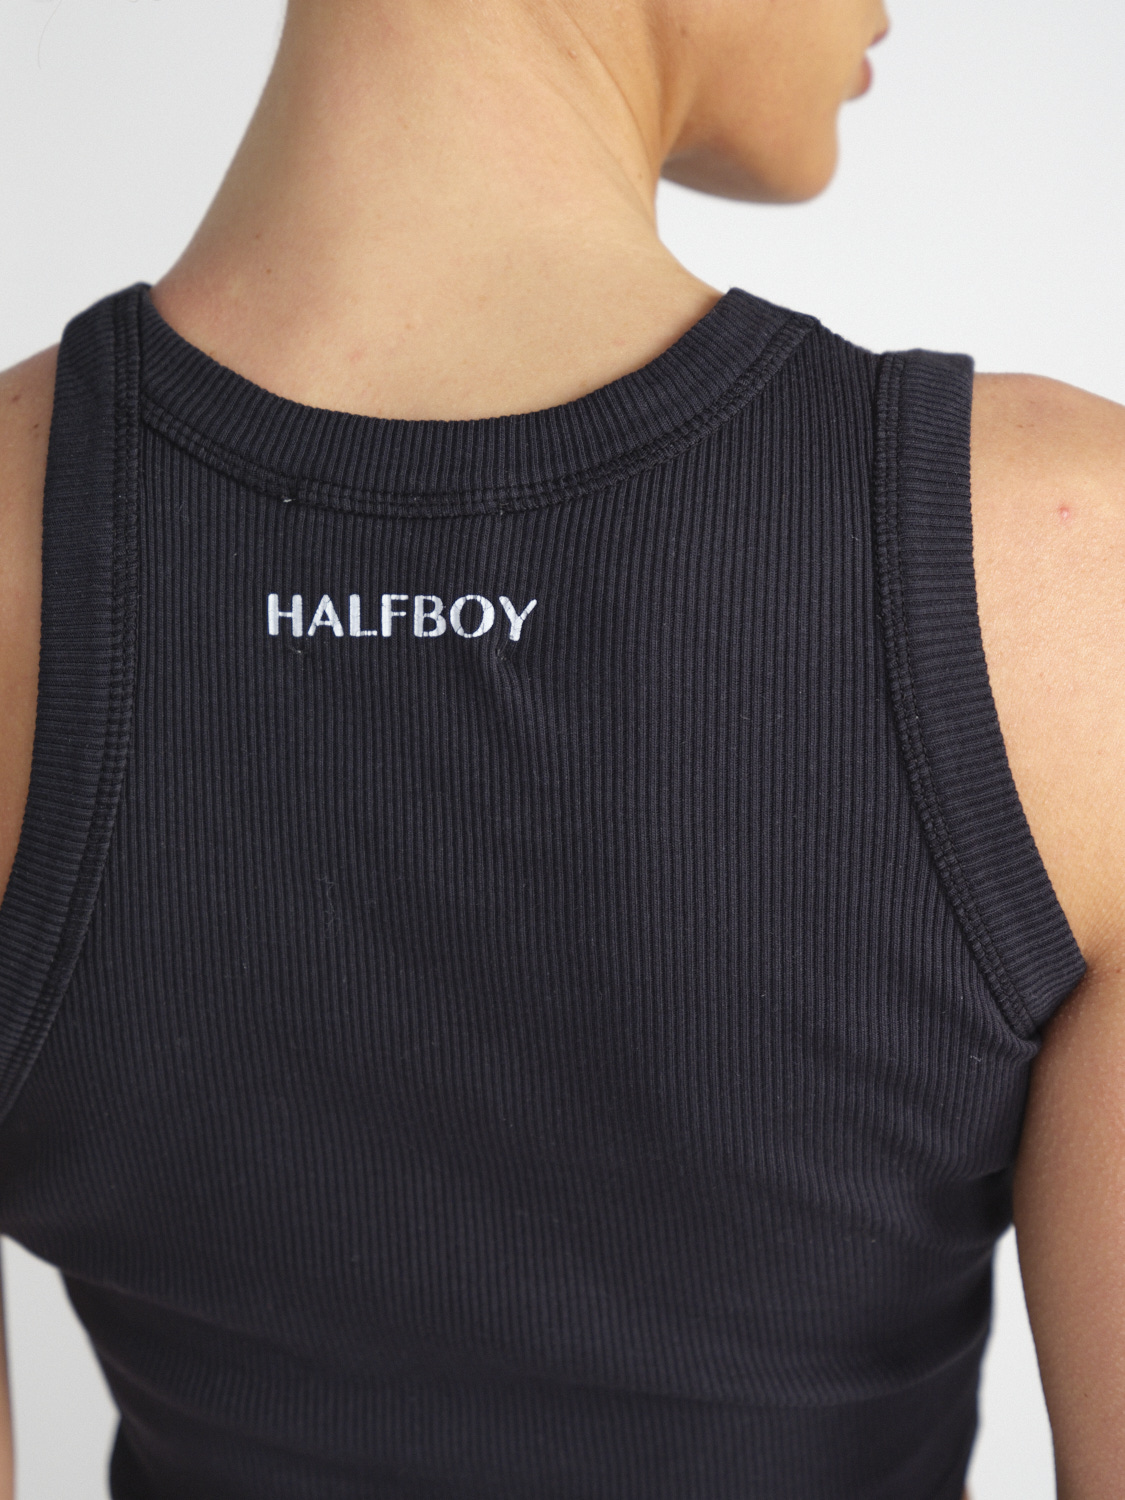 Halfboy Crop – Cropped cotton tank top with logo detail  black XS